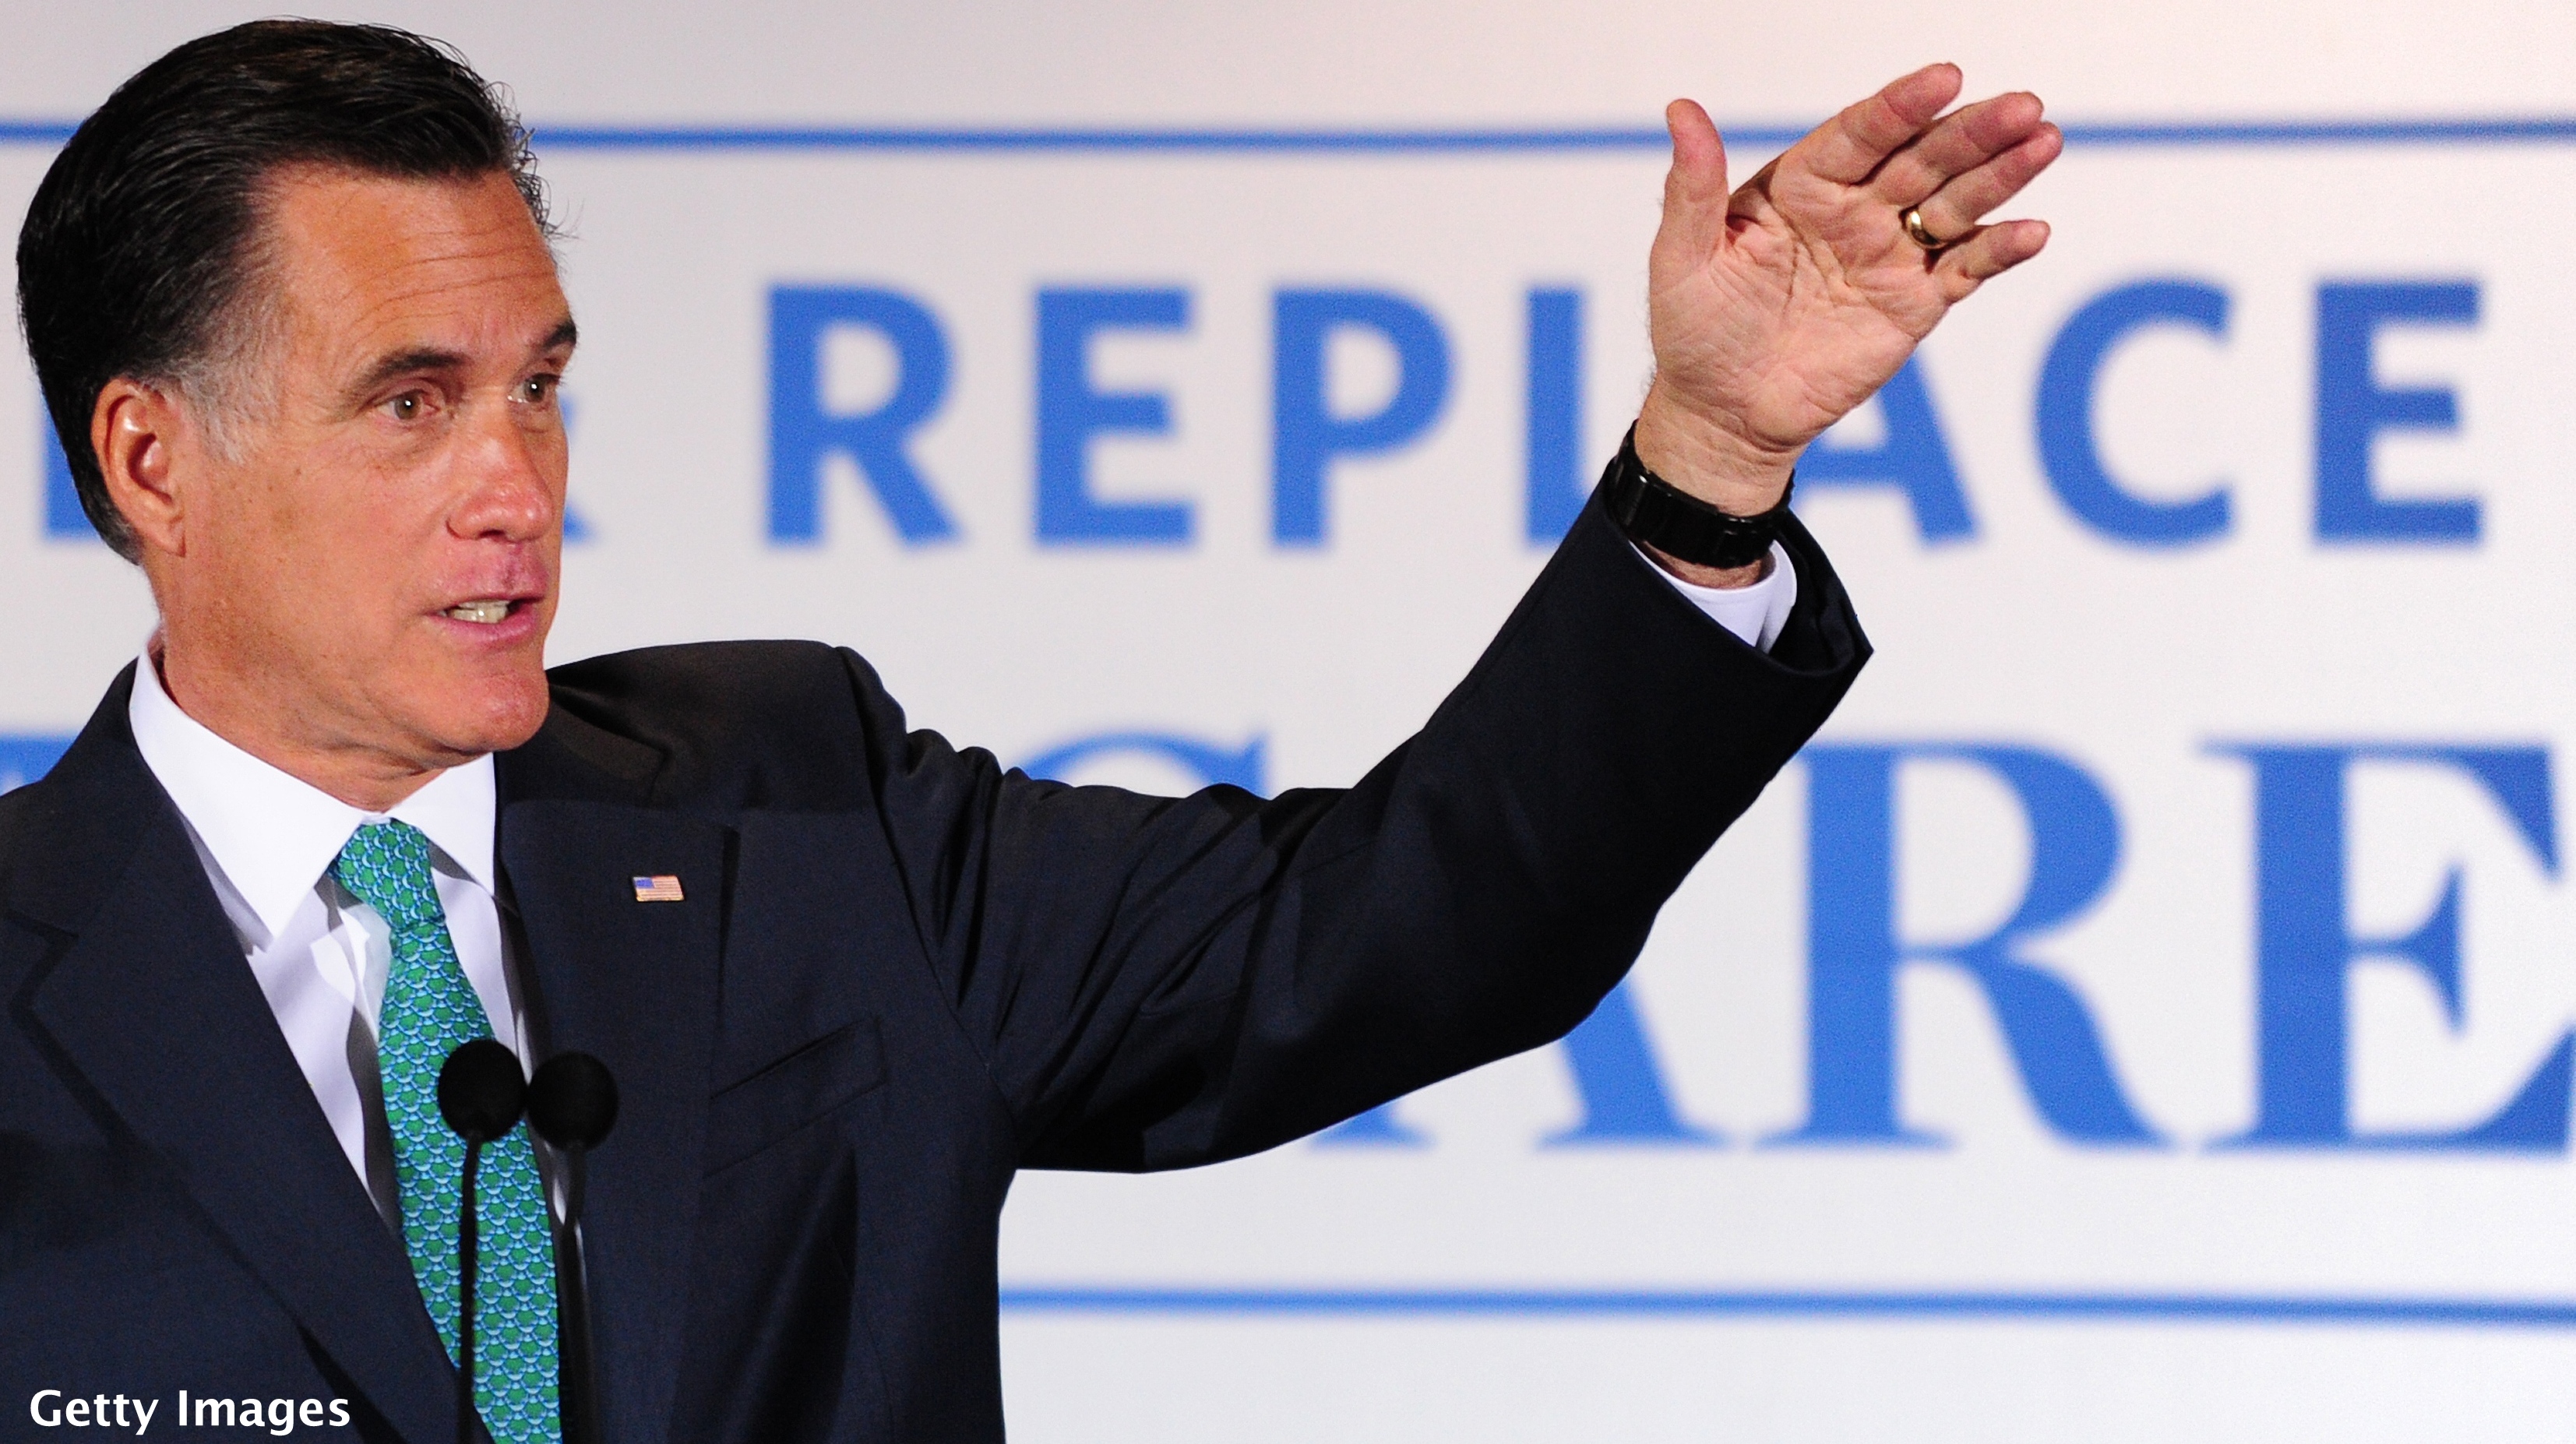 Romney stays optimistic before Tuesday votes despite unwavering challengers